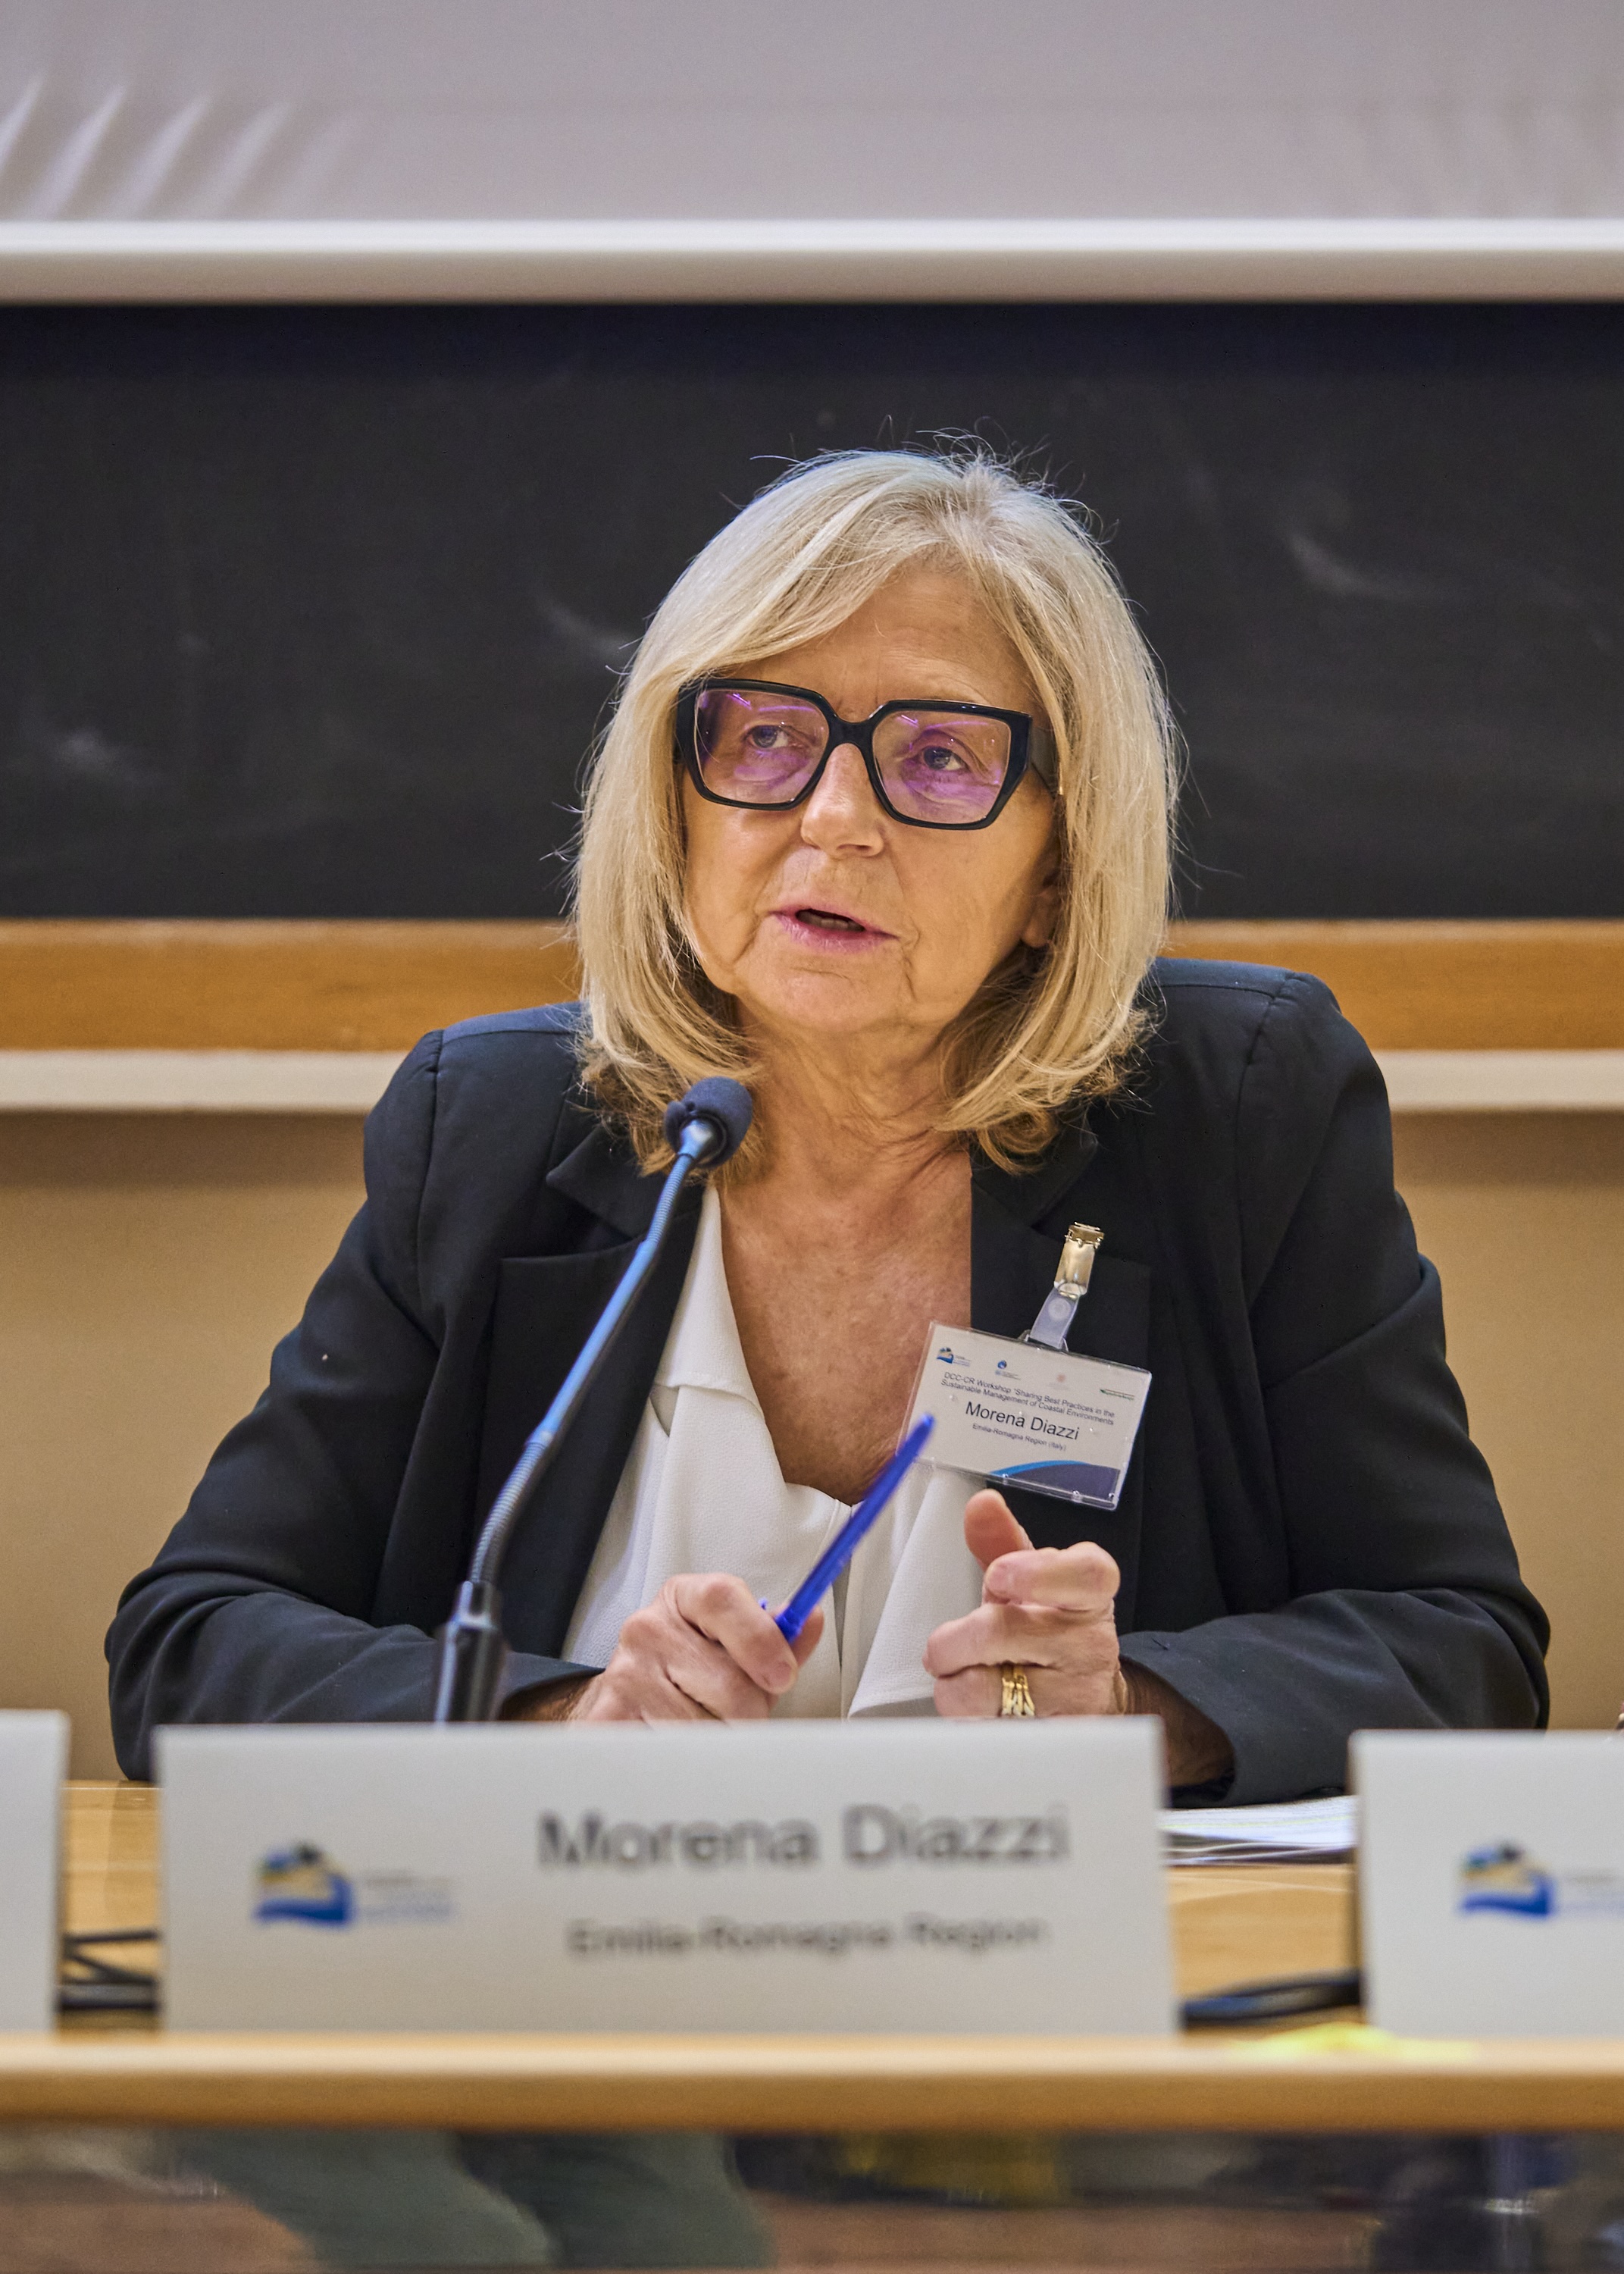 Morena Diazzi welcoming on behalf of Regione Emilia-Romagna